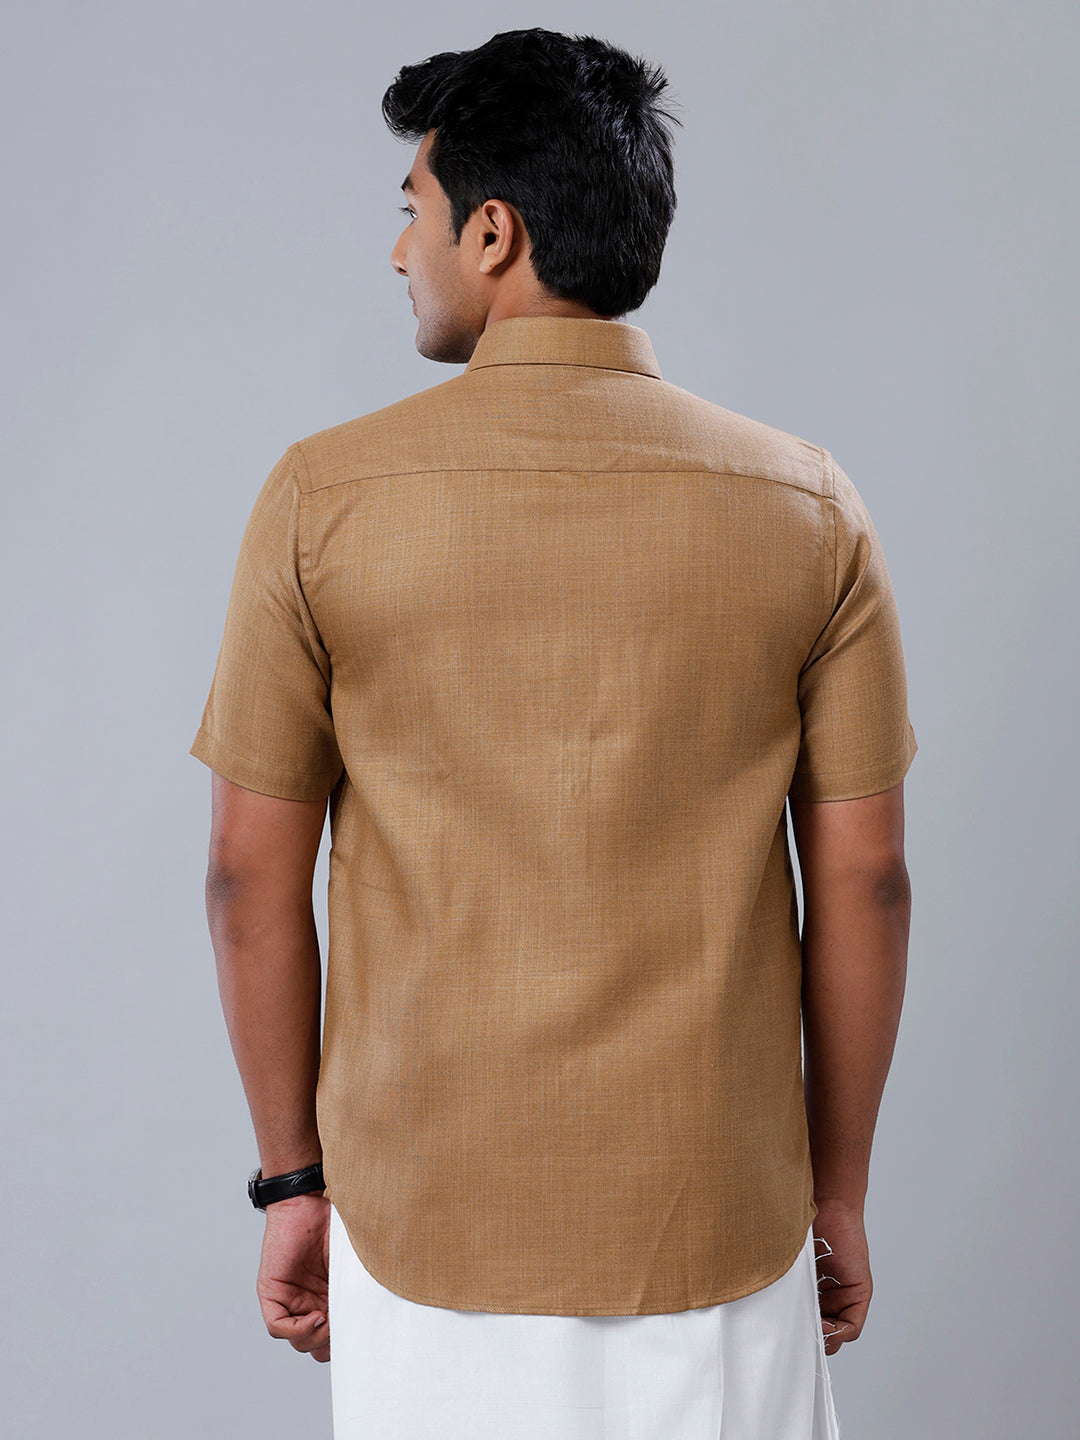 Mens Formal Shirt Half Sleeves Dark Brown T41 TQ6-Back view